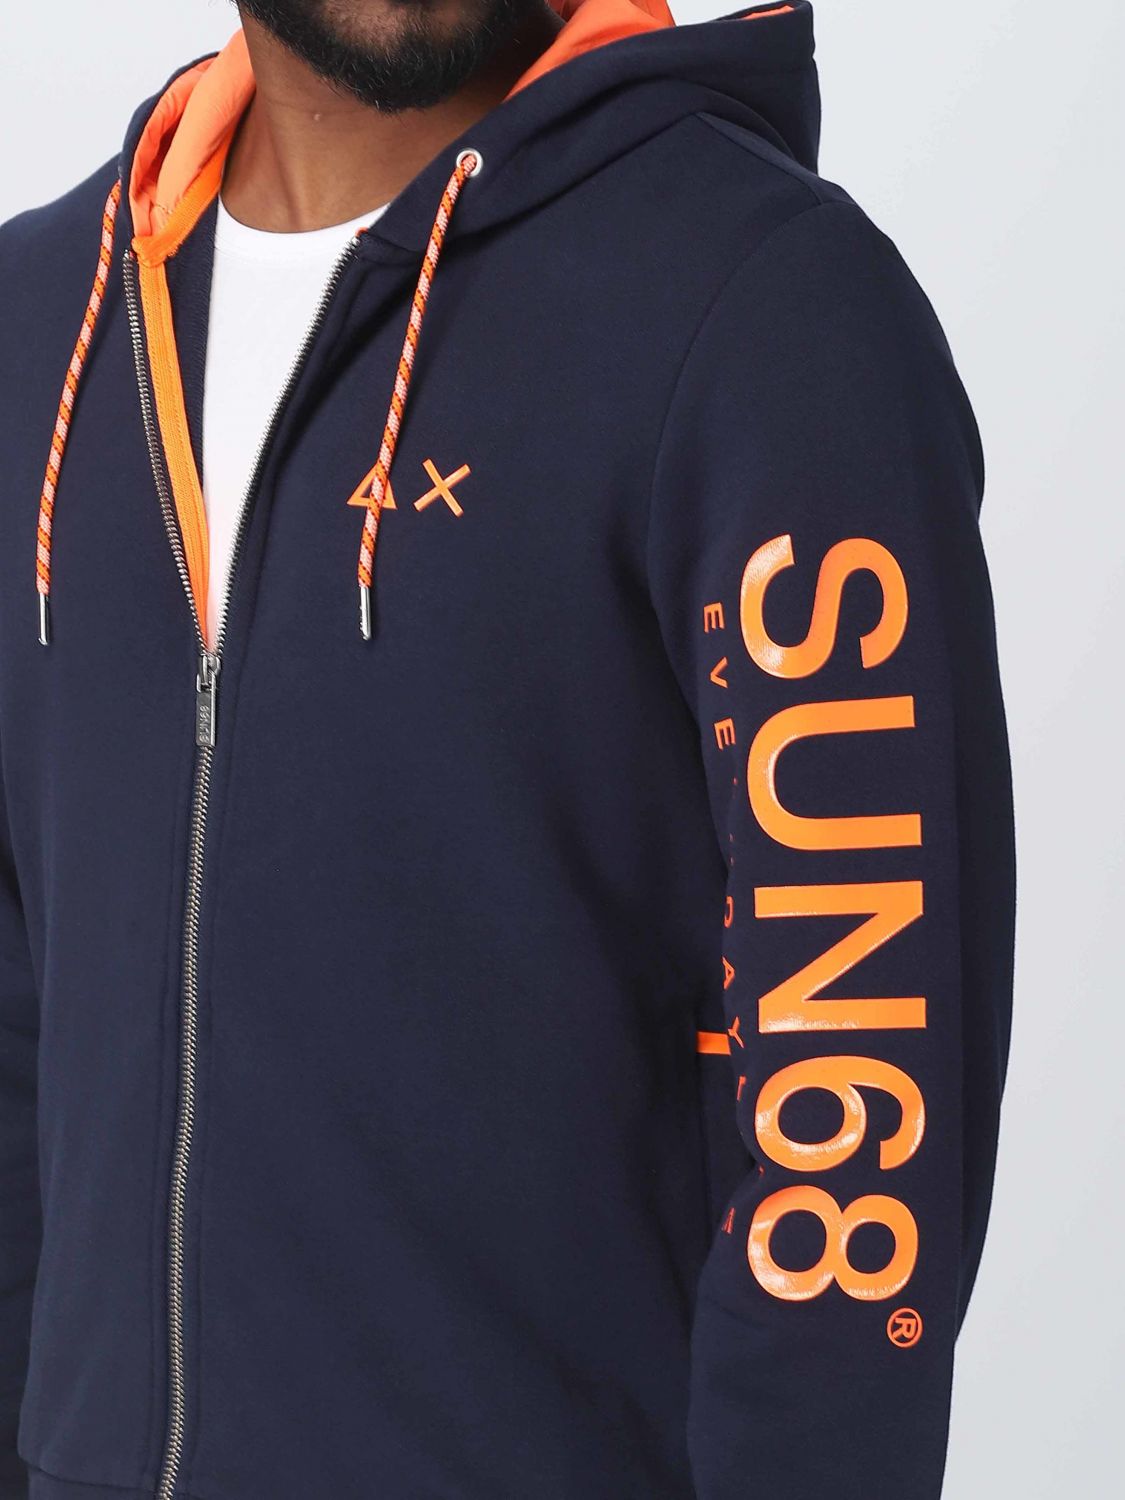 Manieren hop Regeringsverordening SUN 68: sweatshirt for man - Blue 1 | Sun 68 sweatshirt F33111 online on  GIGLIO.COM